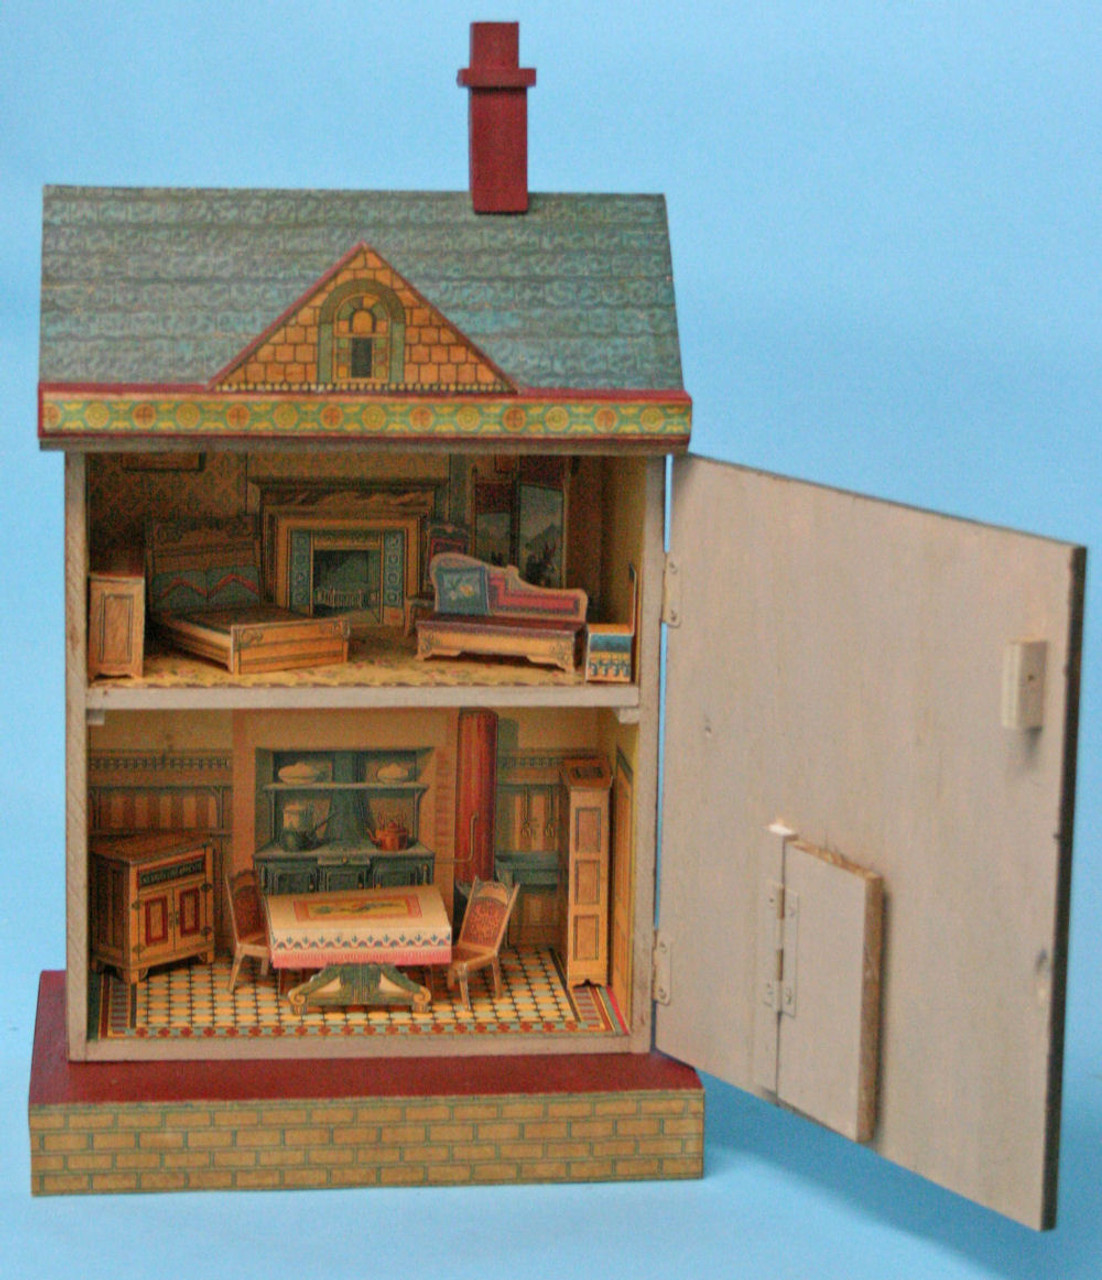 NE487 - 5/64 Wood Dowel - Jeepers Dollhouse Miniatures